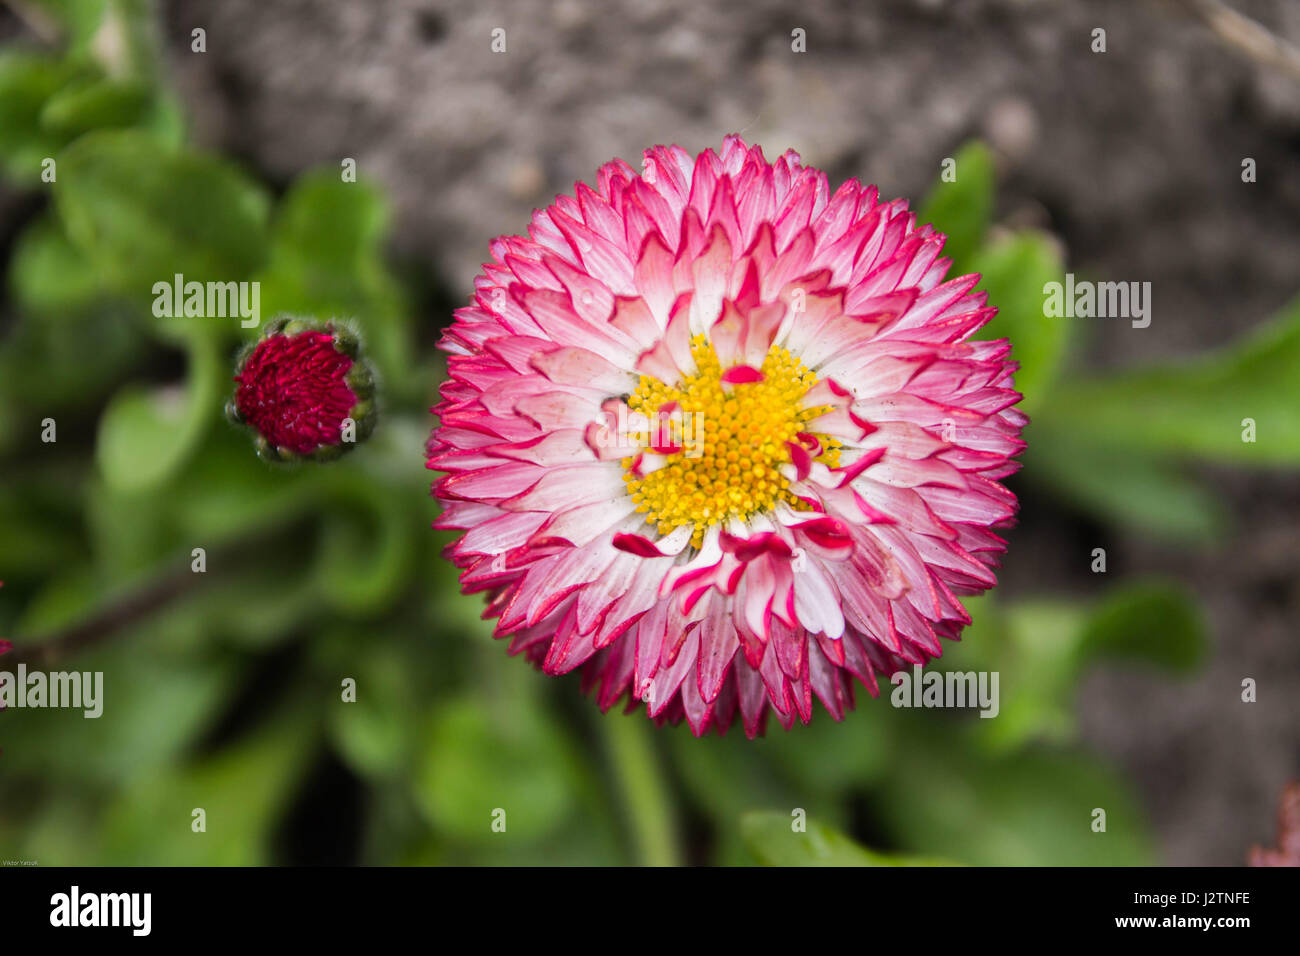 Strawflower. Field flower. Pink and white flower. Stock Photo